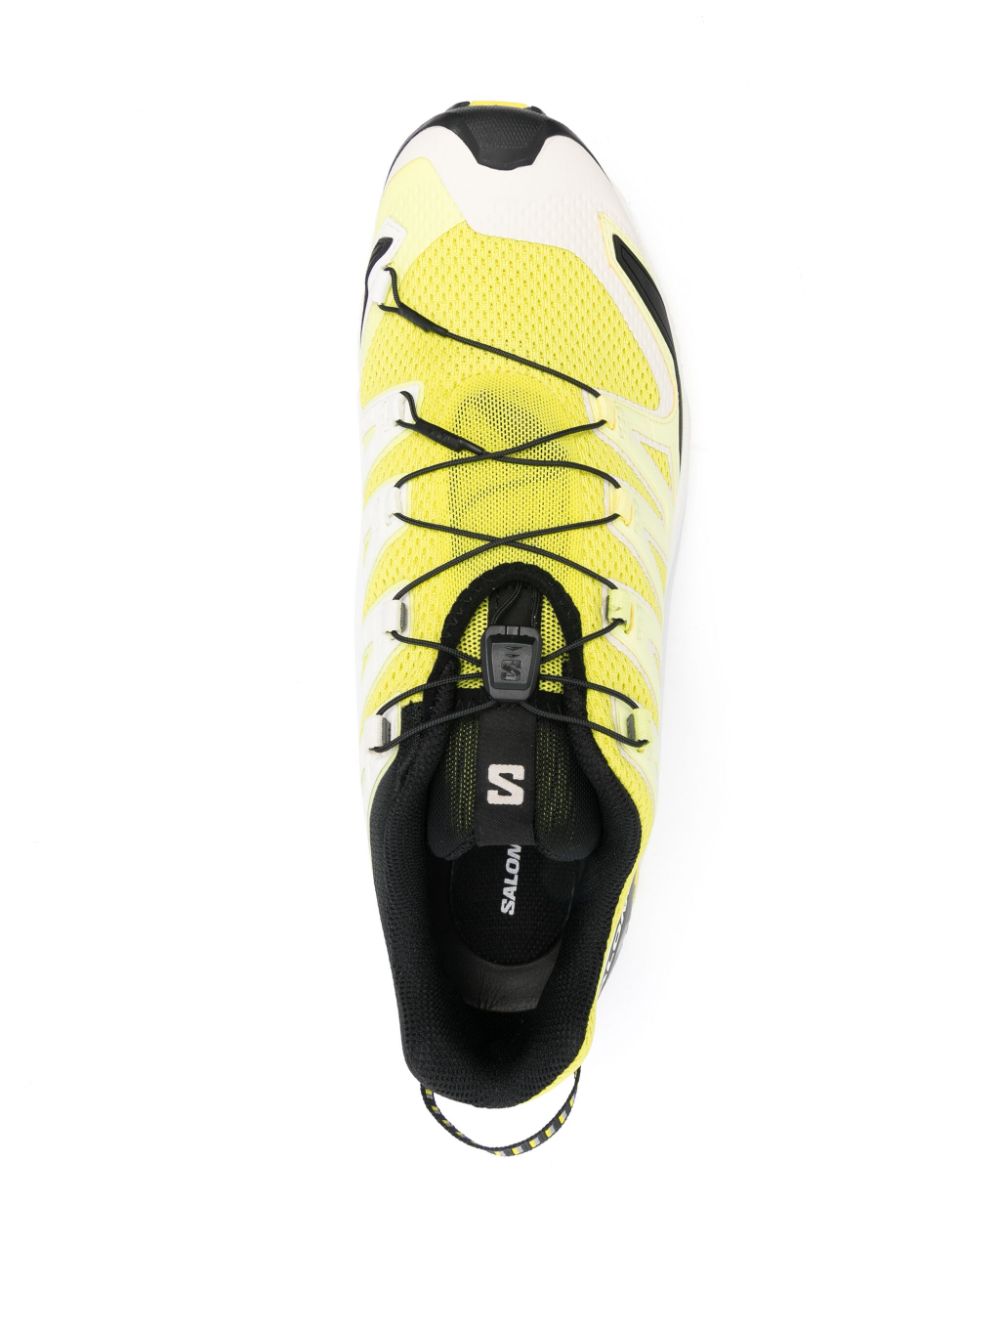 XA Pro 3D V9 contrast sneakers<BR/><BR/><BR/>